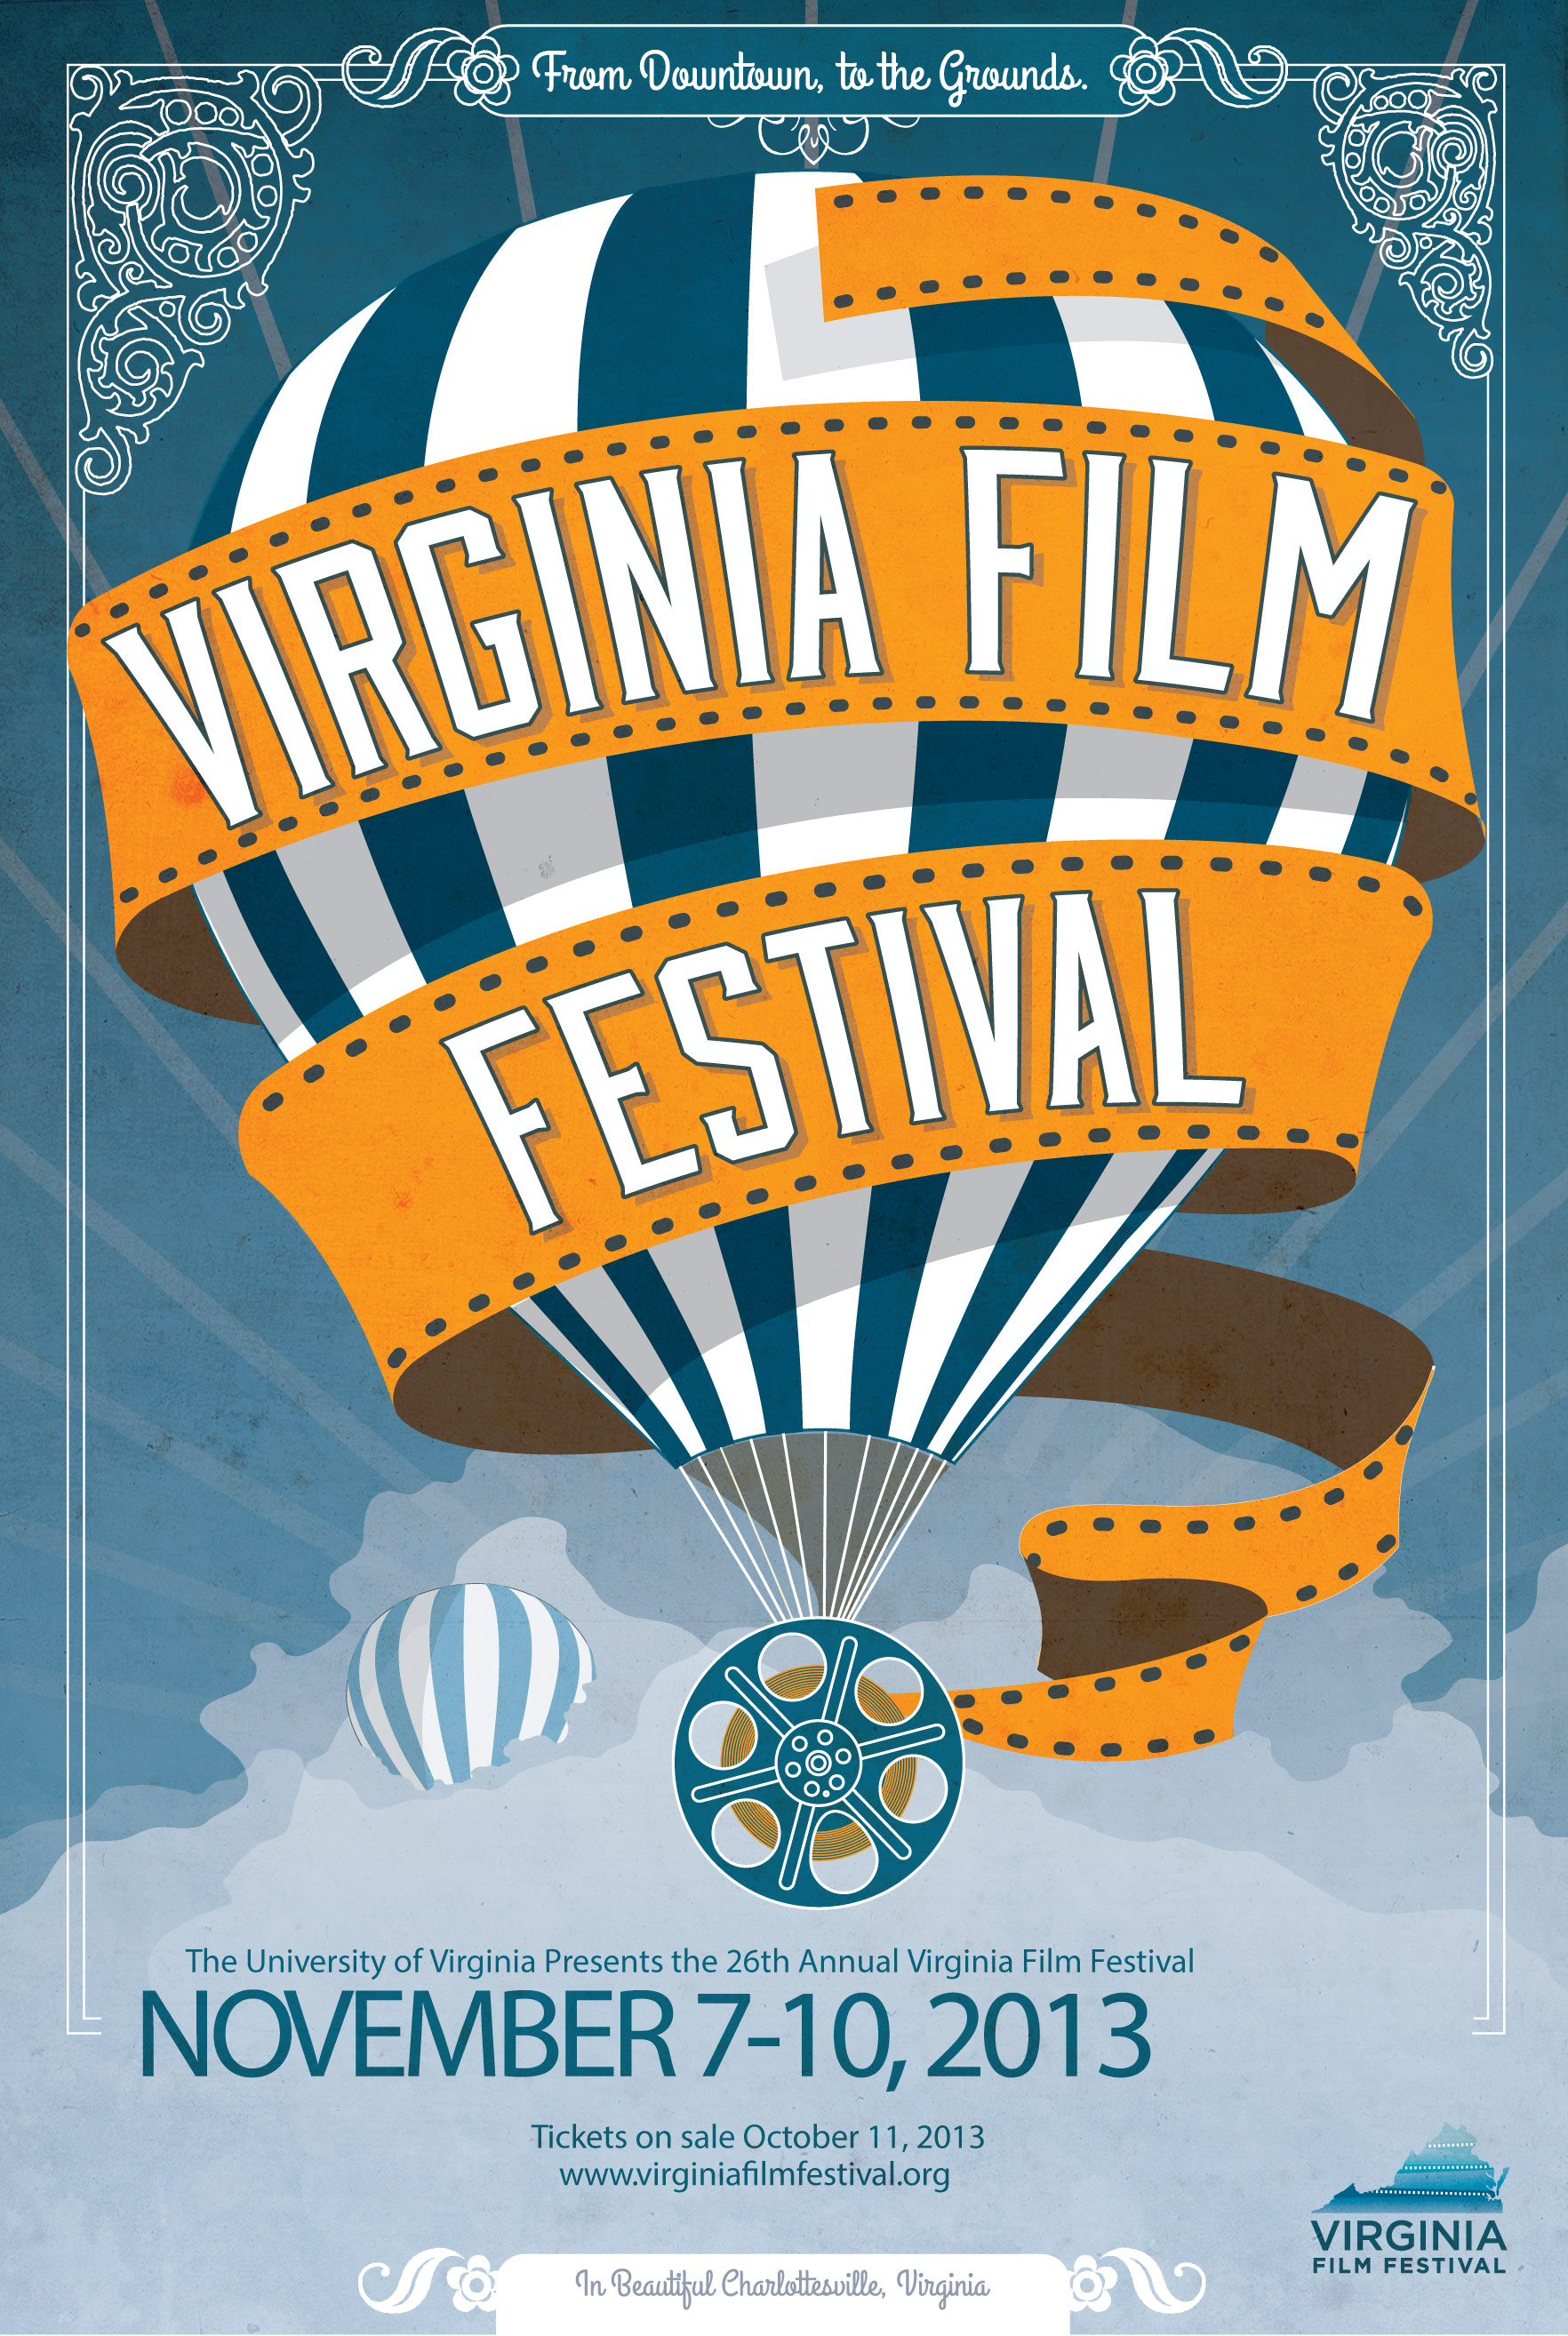 text reads: Virginia Film festival. The university of Virginia Presents the 26th annual Virginia film festival November 7-10, 2013. Tickets on sale October 11, 2013 www.virginiaFilmFestival.org